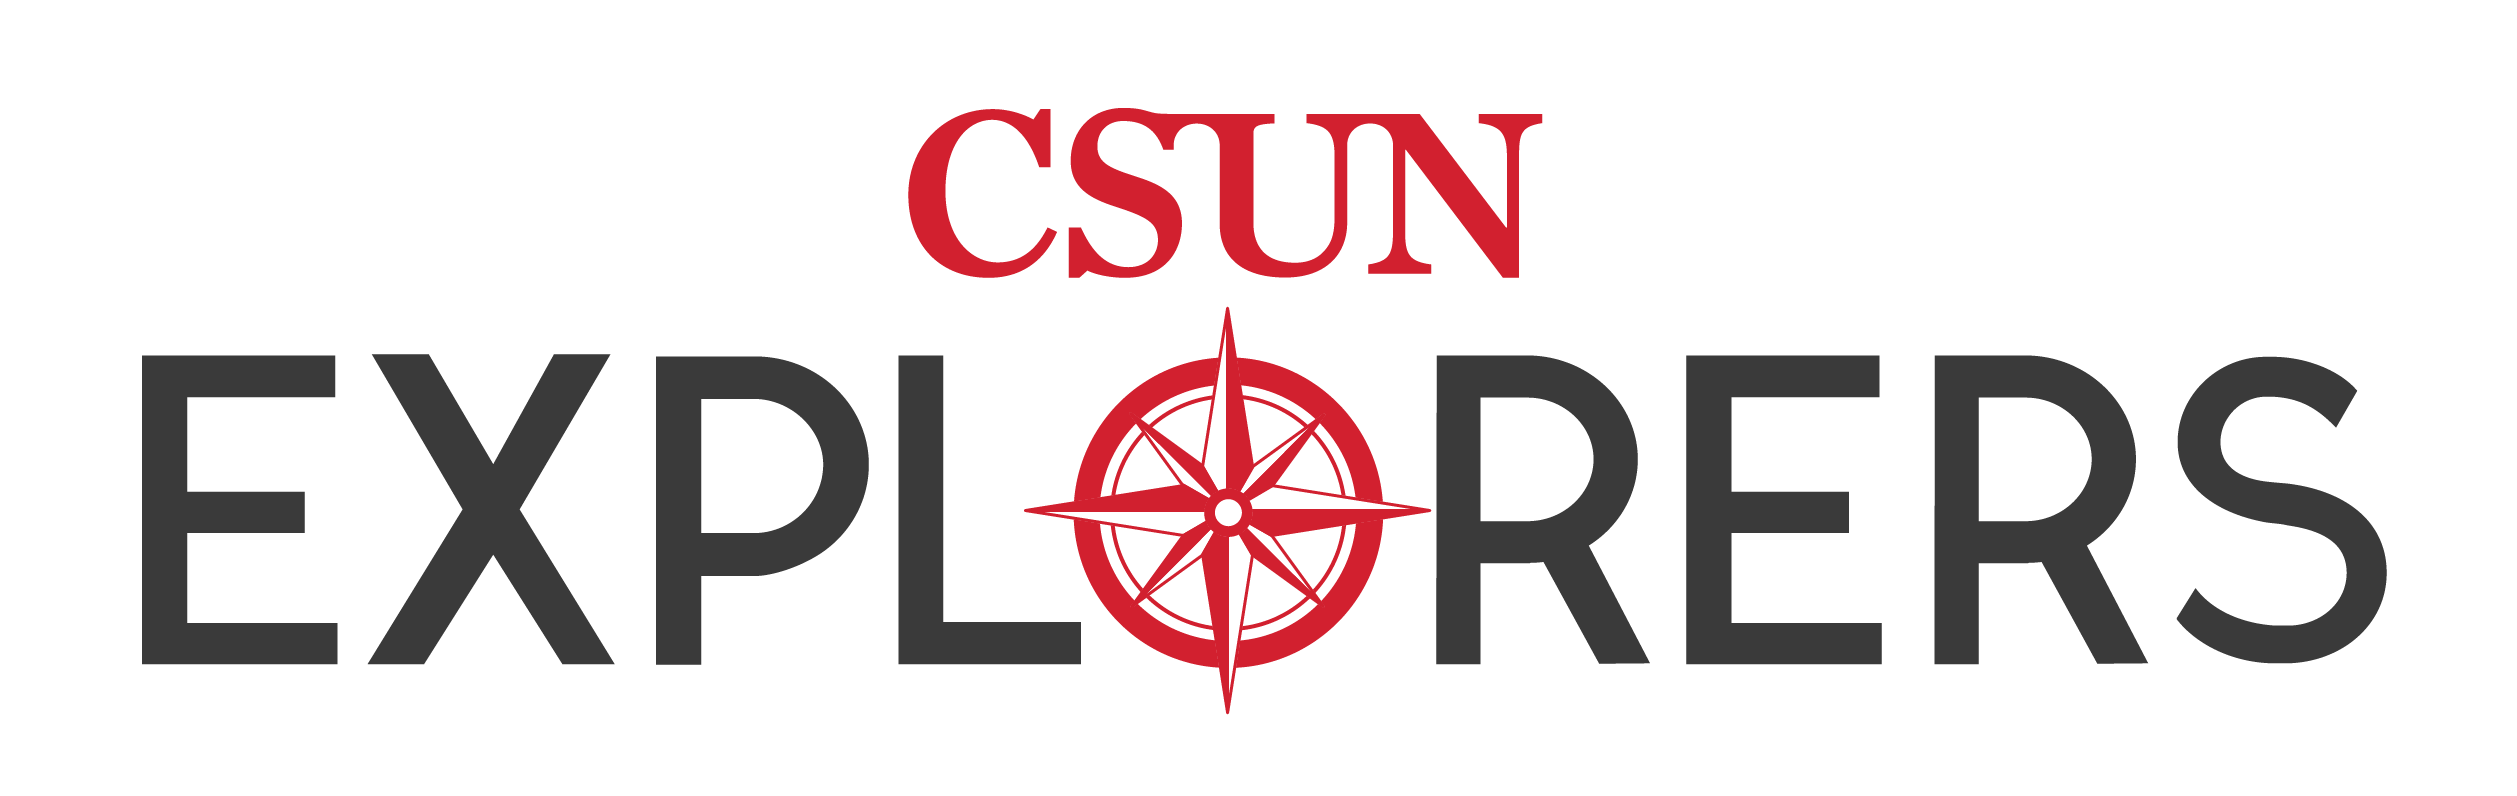 CSUN Explorers